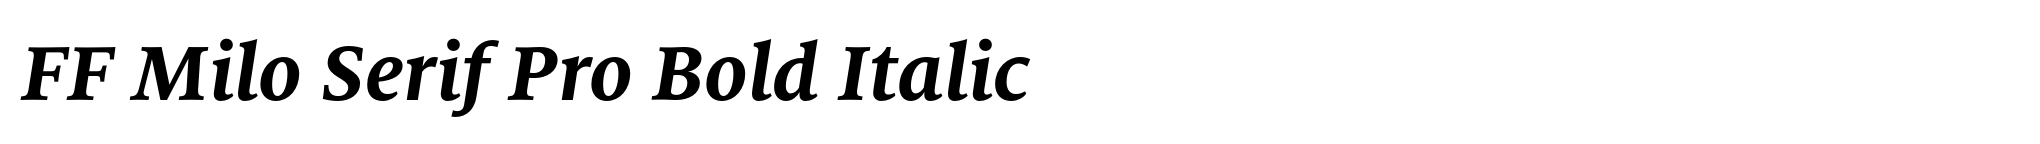 FF Milo Serif Pro Bold Italic image